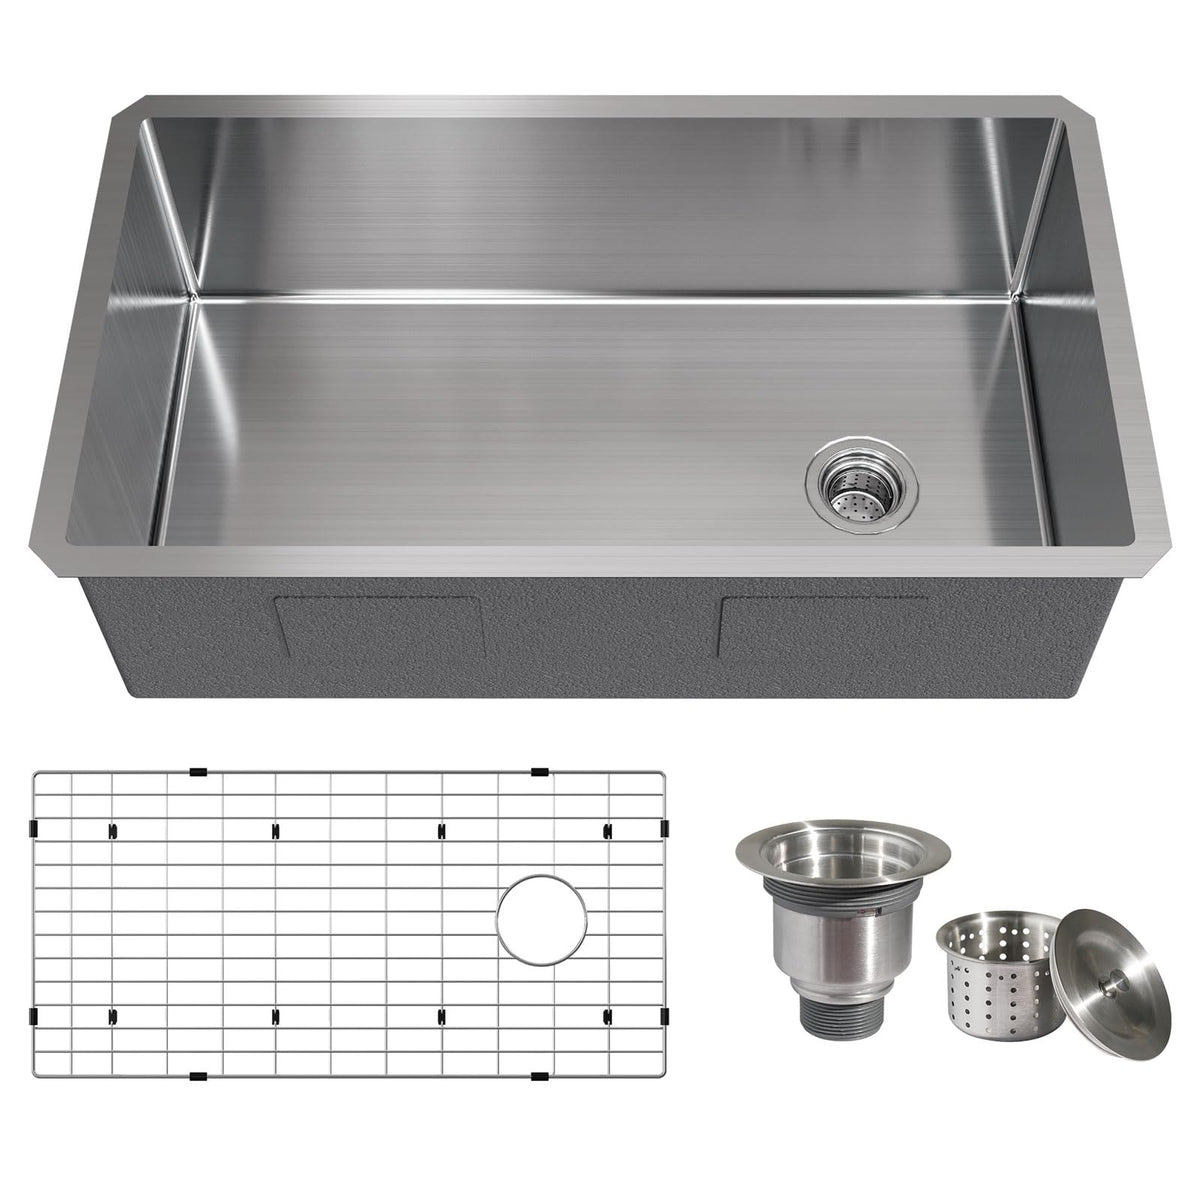 TECASA Undermount Sink Single Bowl Stainless Steel Sink with Sink Grid and Sink Strainer—32 inch Kitchen Sink